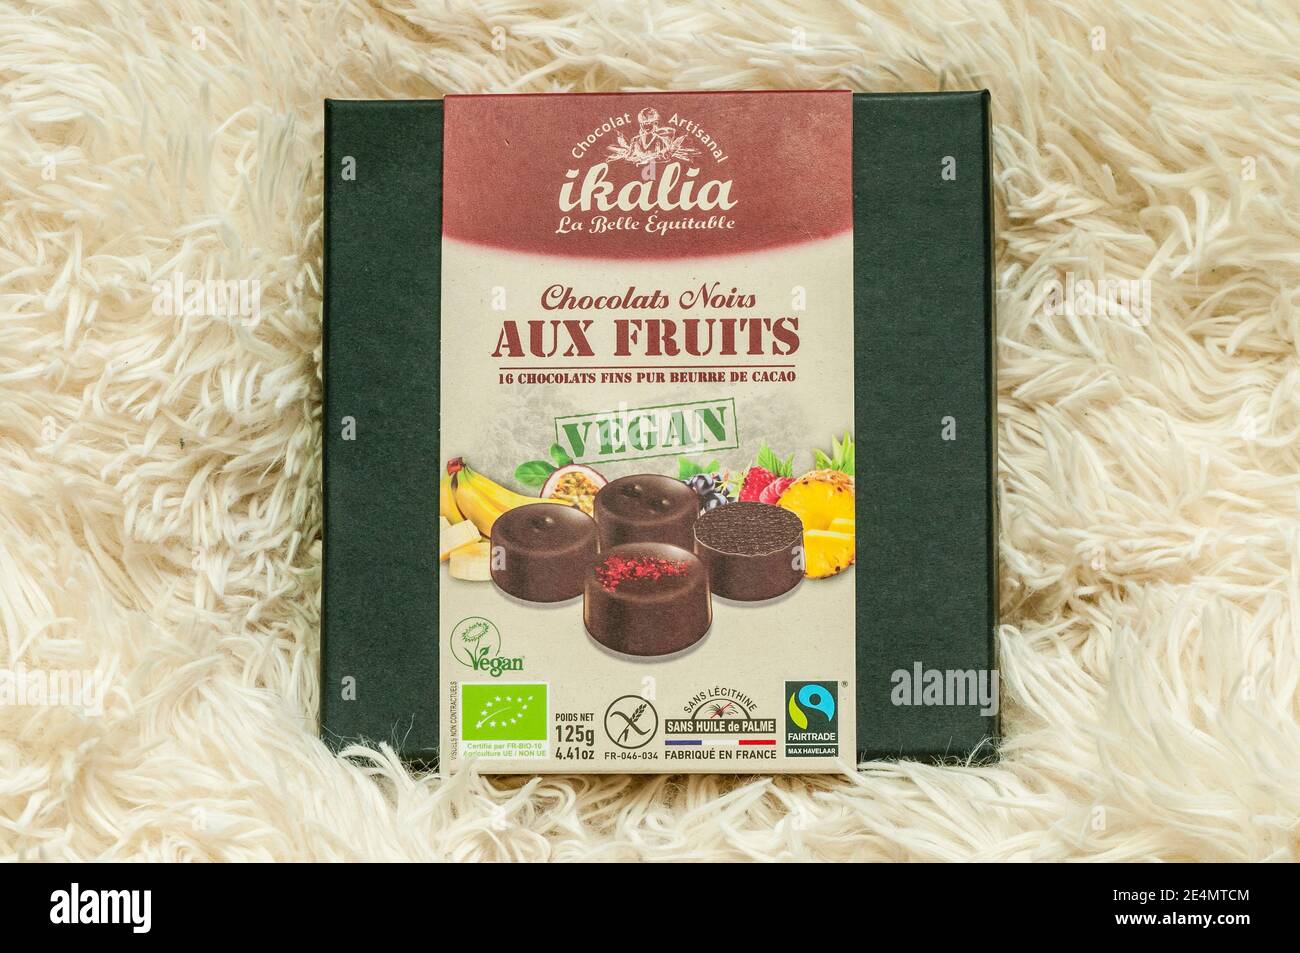 Vegane Pralinen-Box, ikalia, Chocolats noirs aux fruits Stockfoto